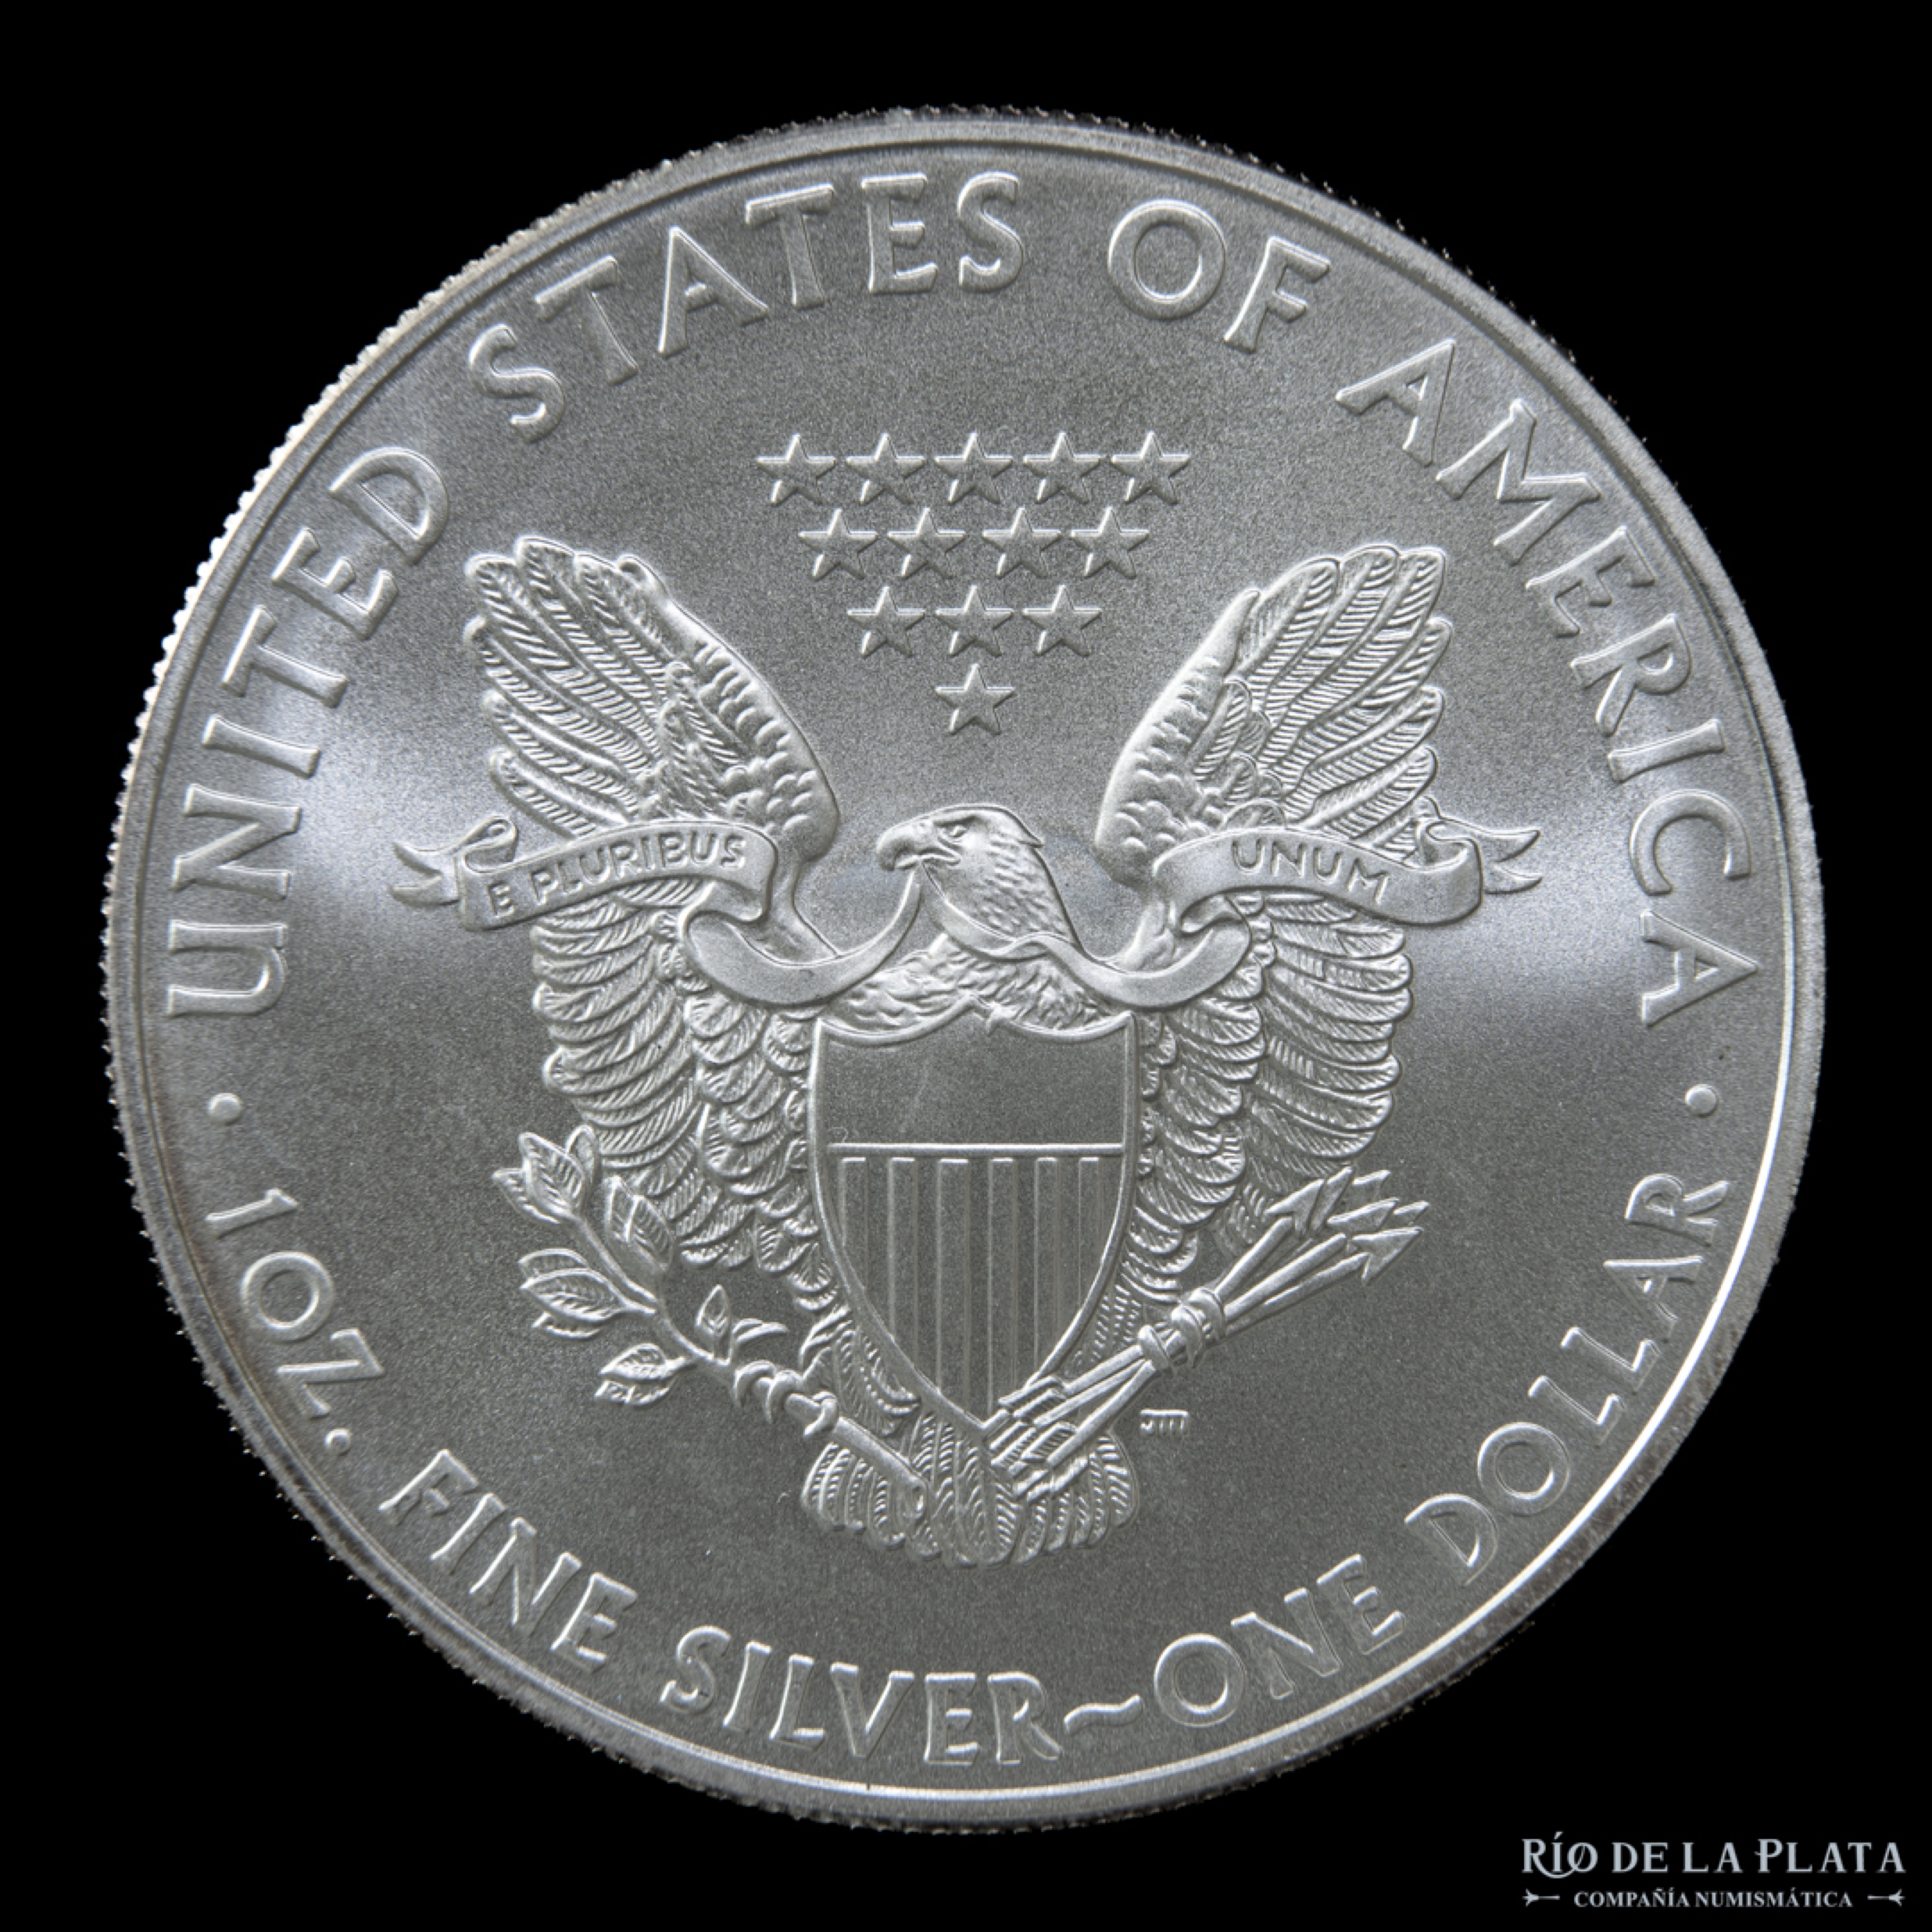 USA. 1 Dollar 2008. Silver Eagle. ... 